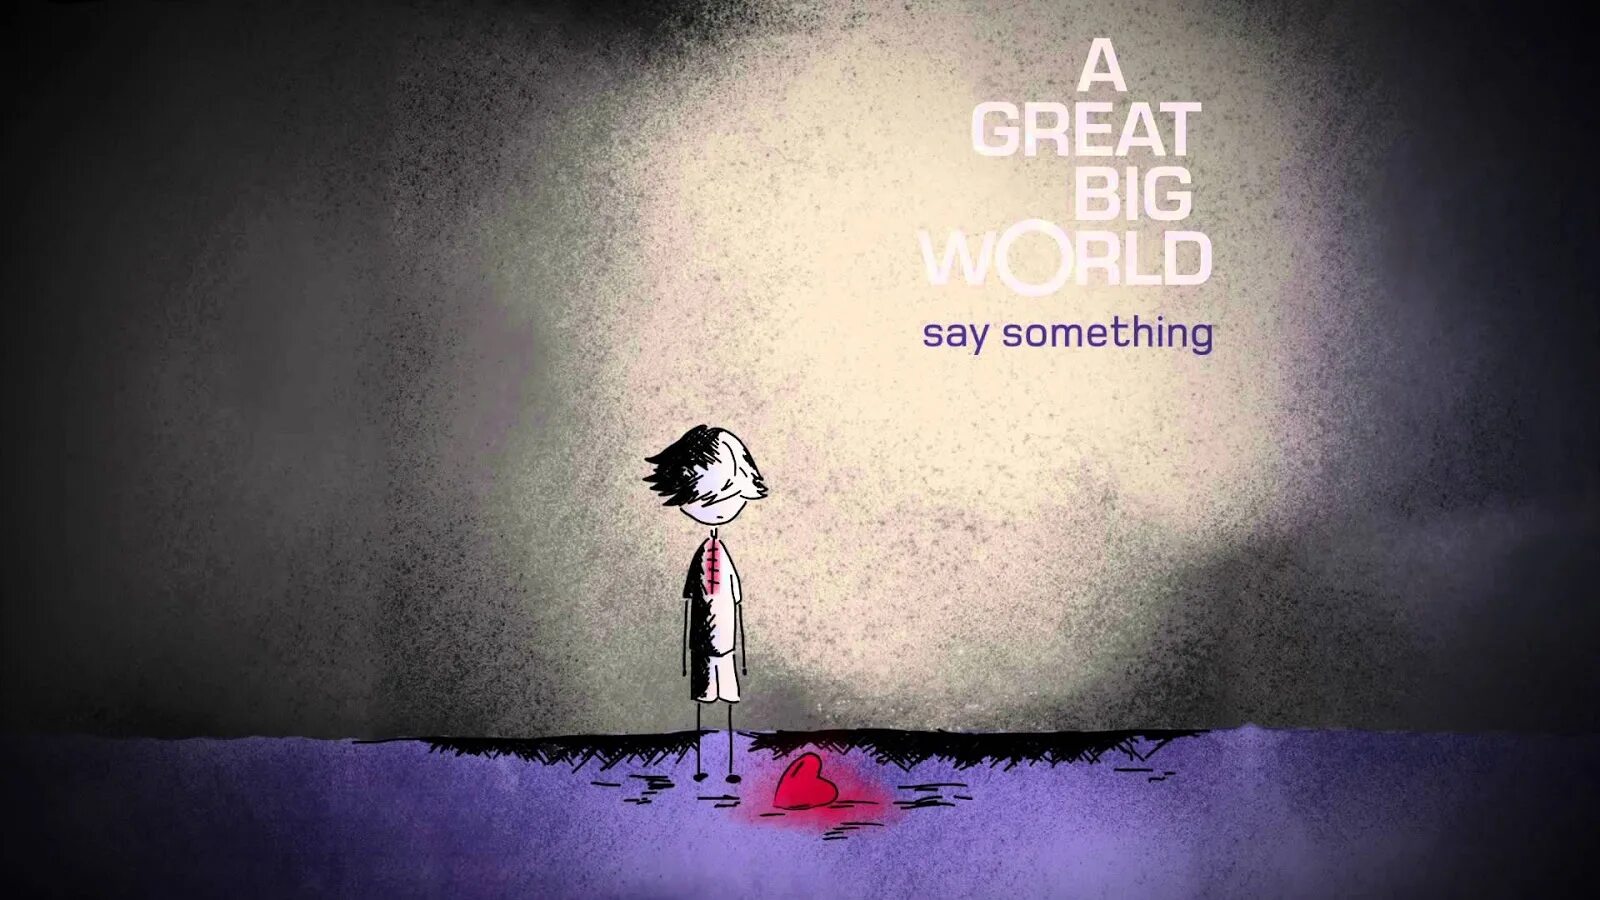 Just say something. Say something!. Big World. Say something a great big World текст. A great big World.